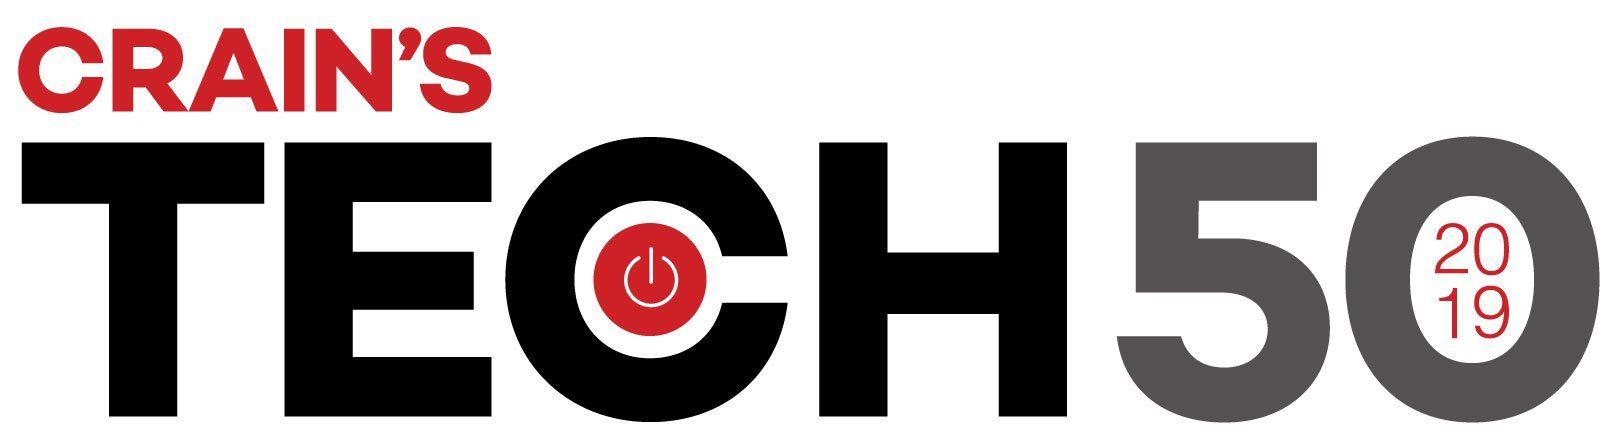 Crain Logo - Tech 50 2019. Crain's Chicago Business